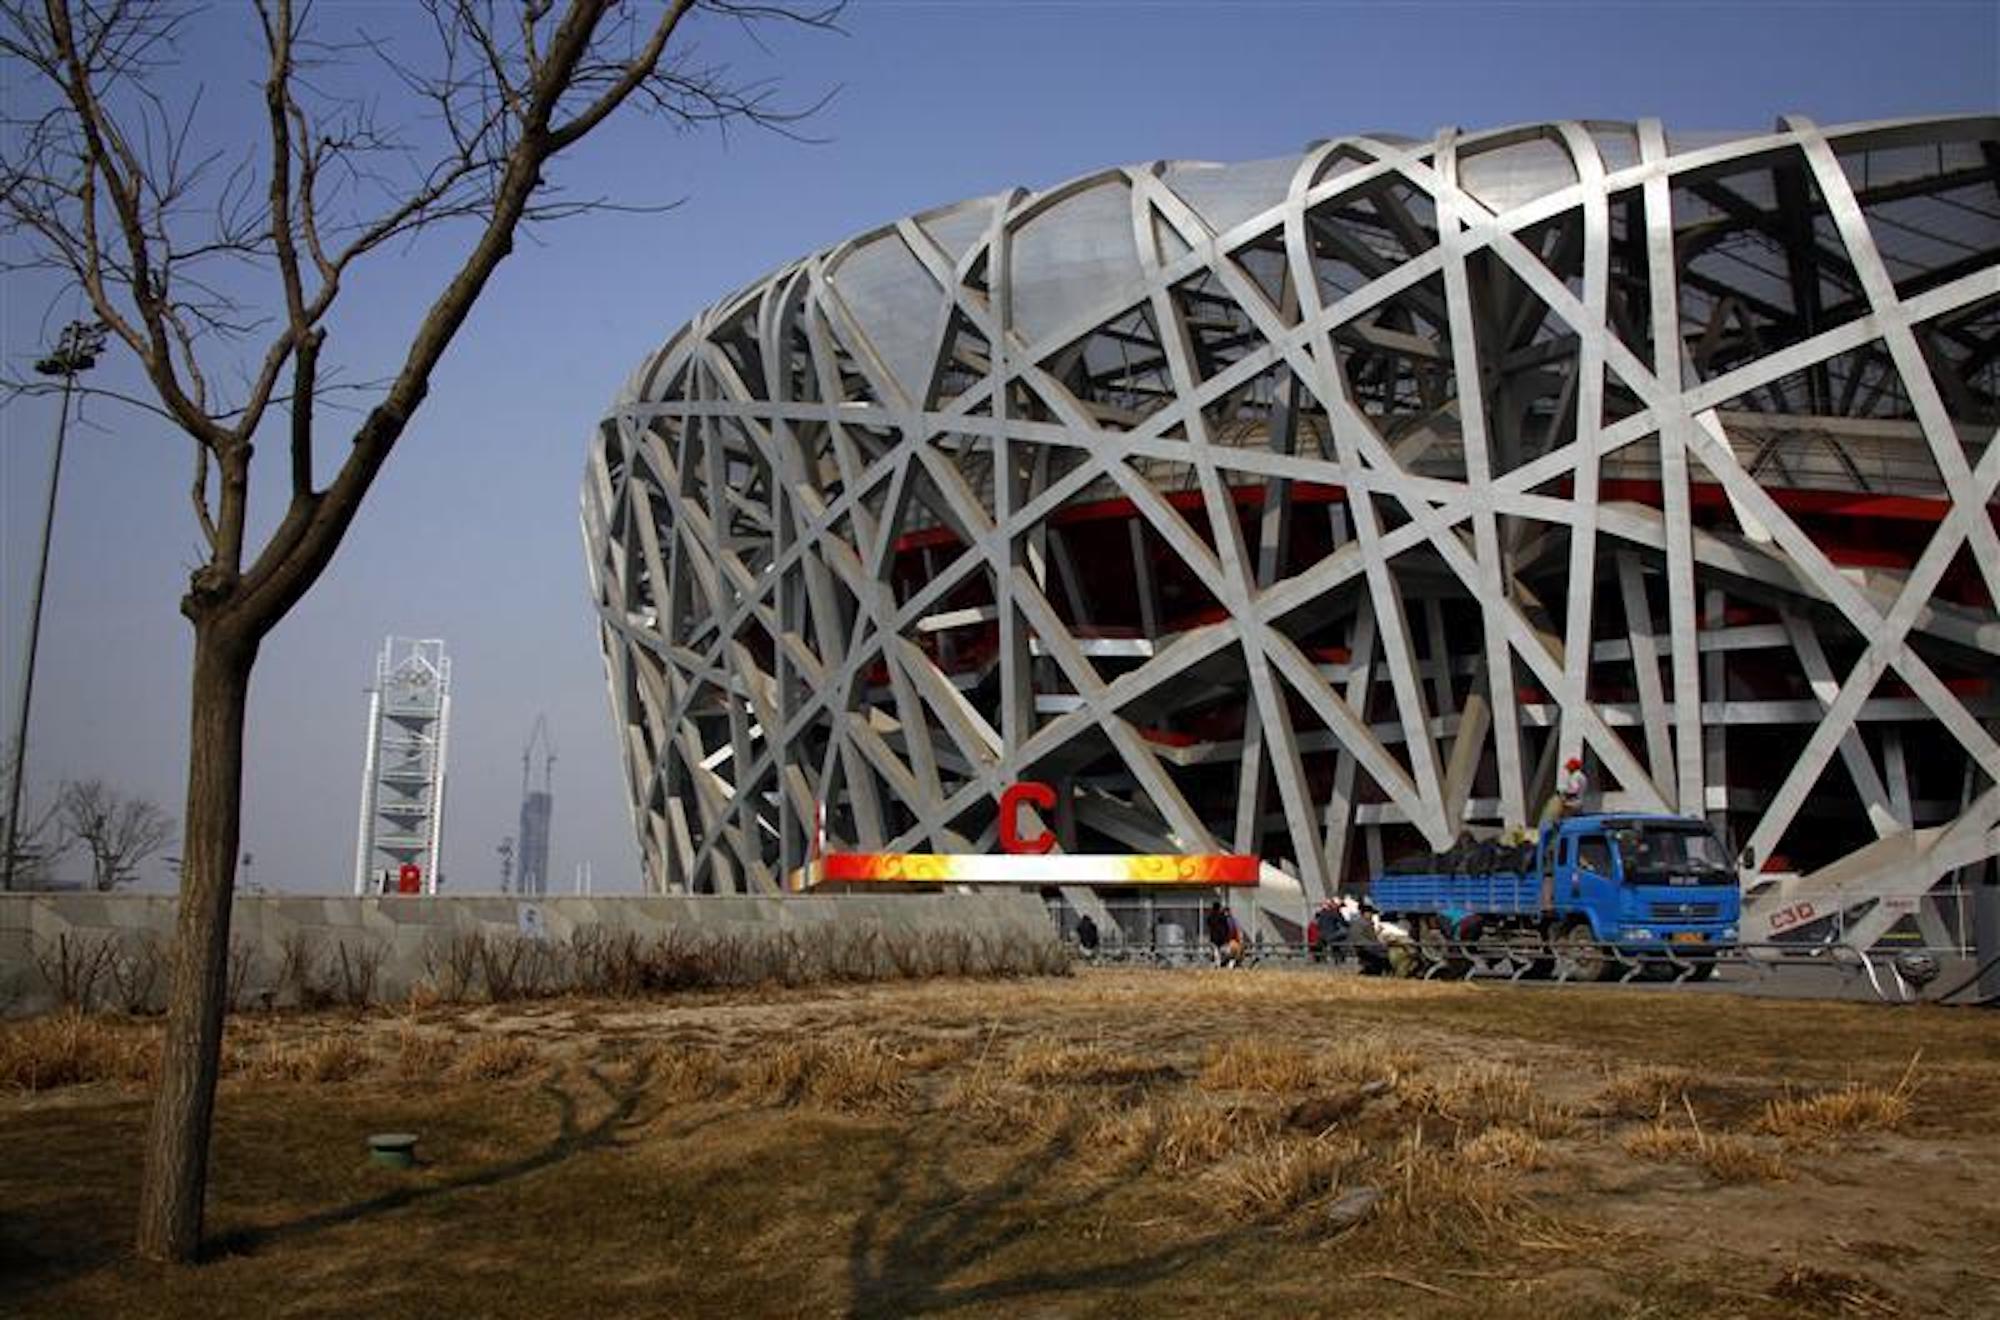 Beijing National Stadium "The Bird's Nest"